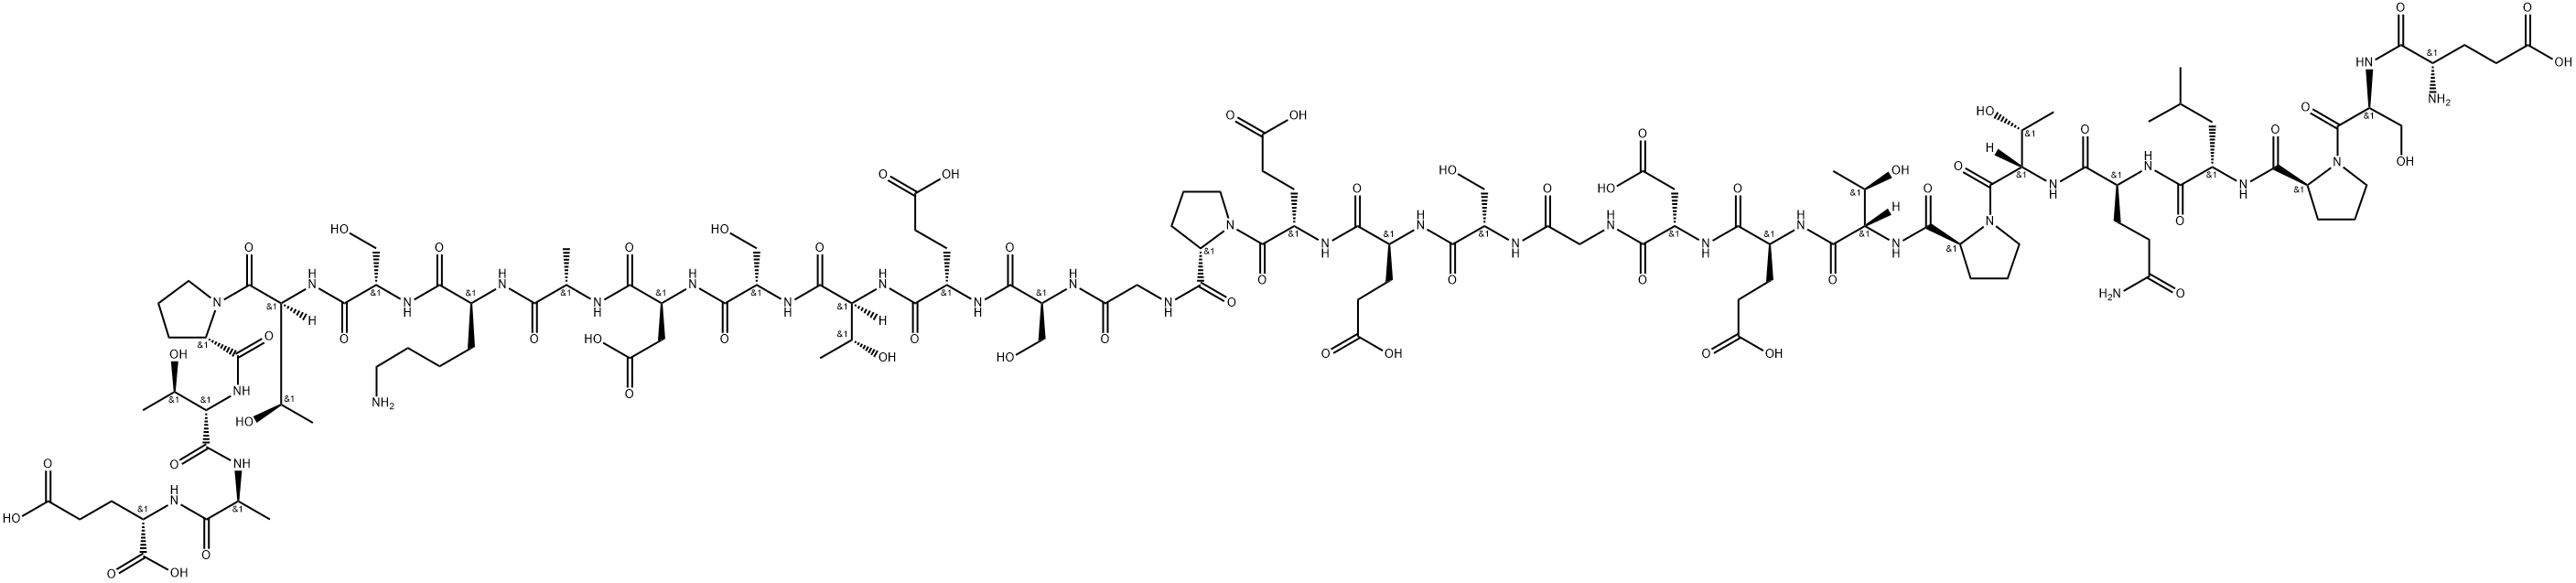 Tau Peptide (45-73) (Exon 2/Insert 1 Domain) Structure